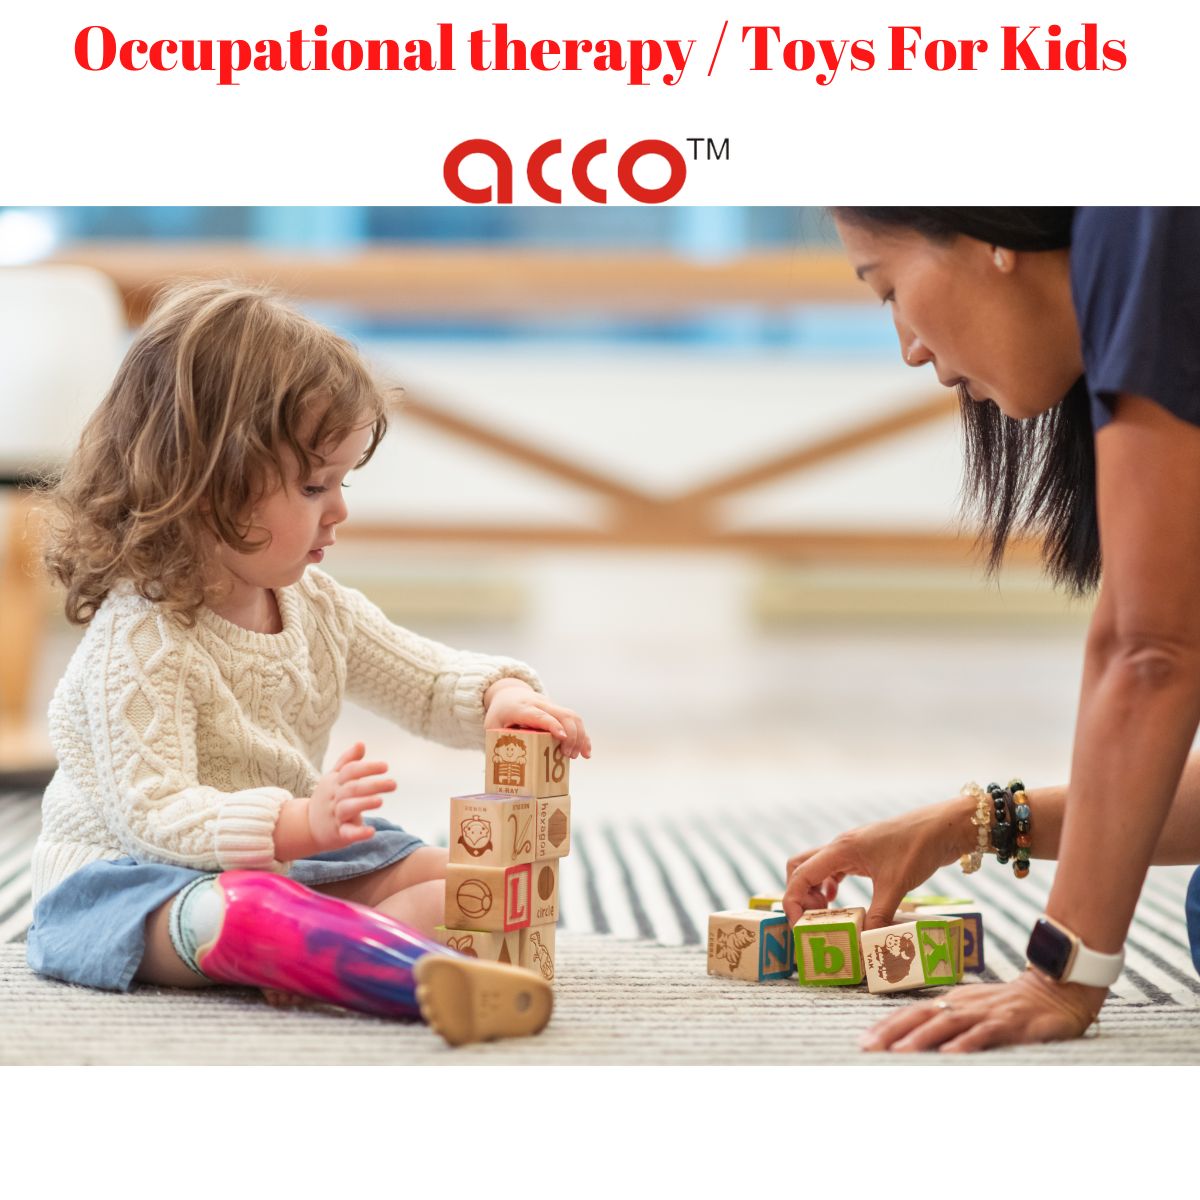 acco Multi Shape Peg Board Toys for Kids (16 Pegs)